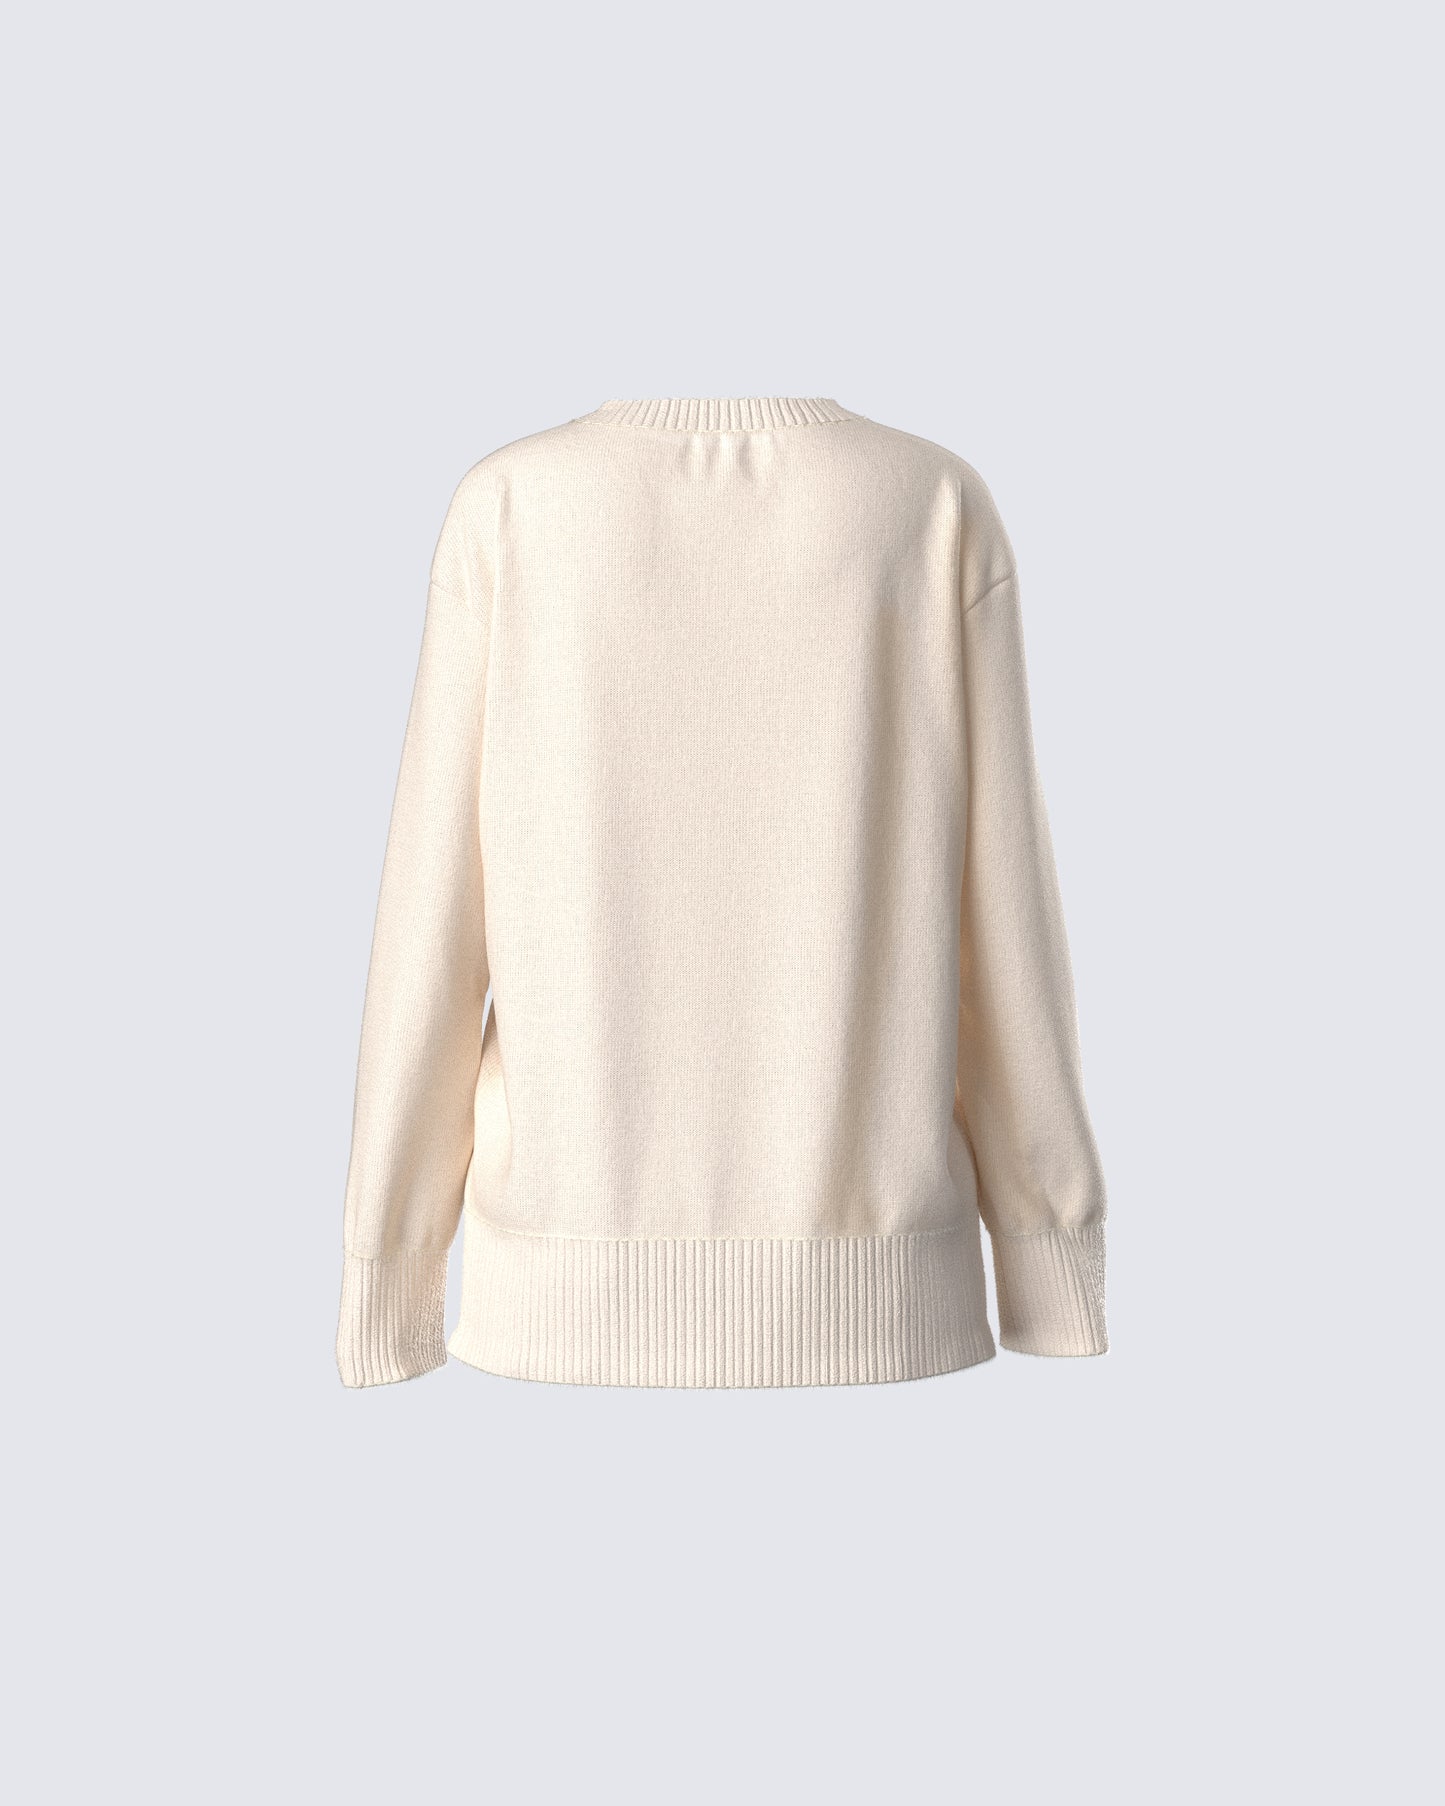 Magnolia Cream Sweater Knit Top